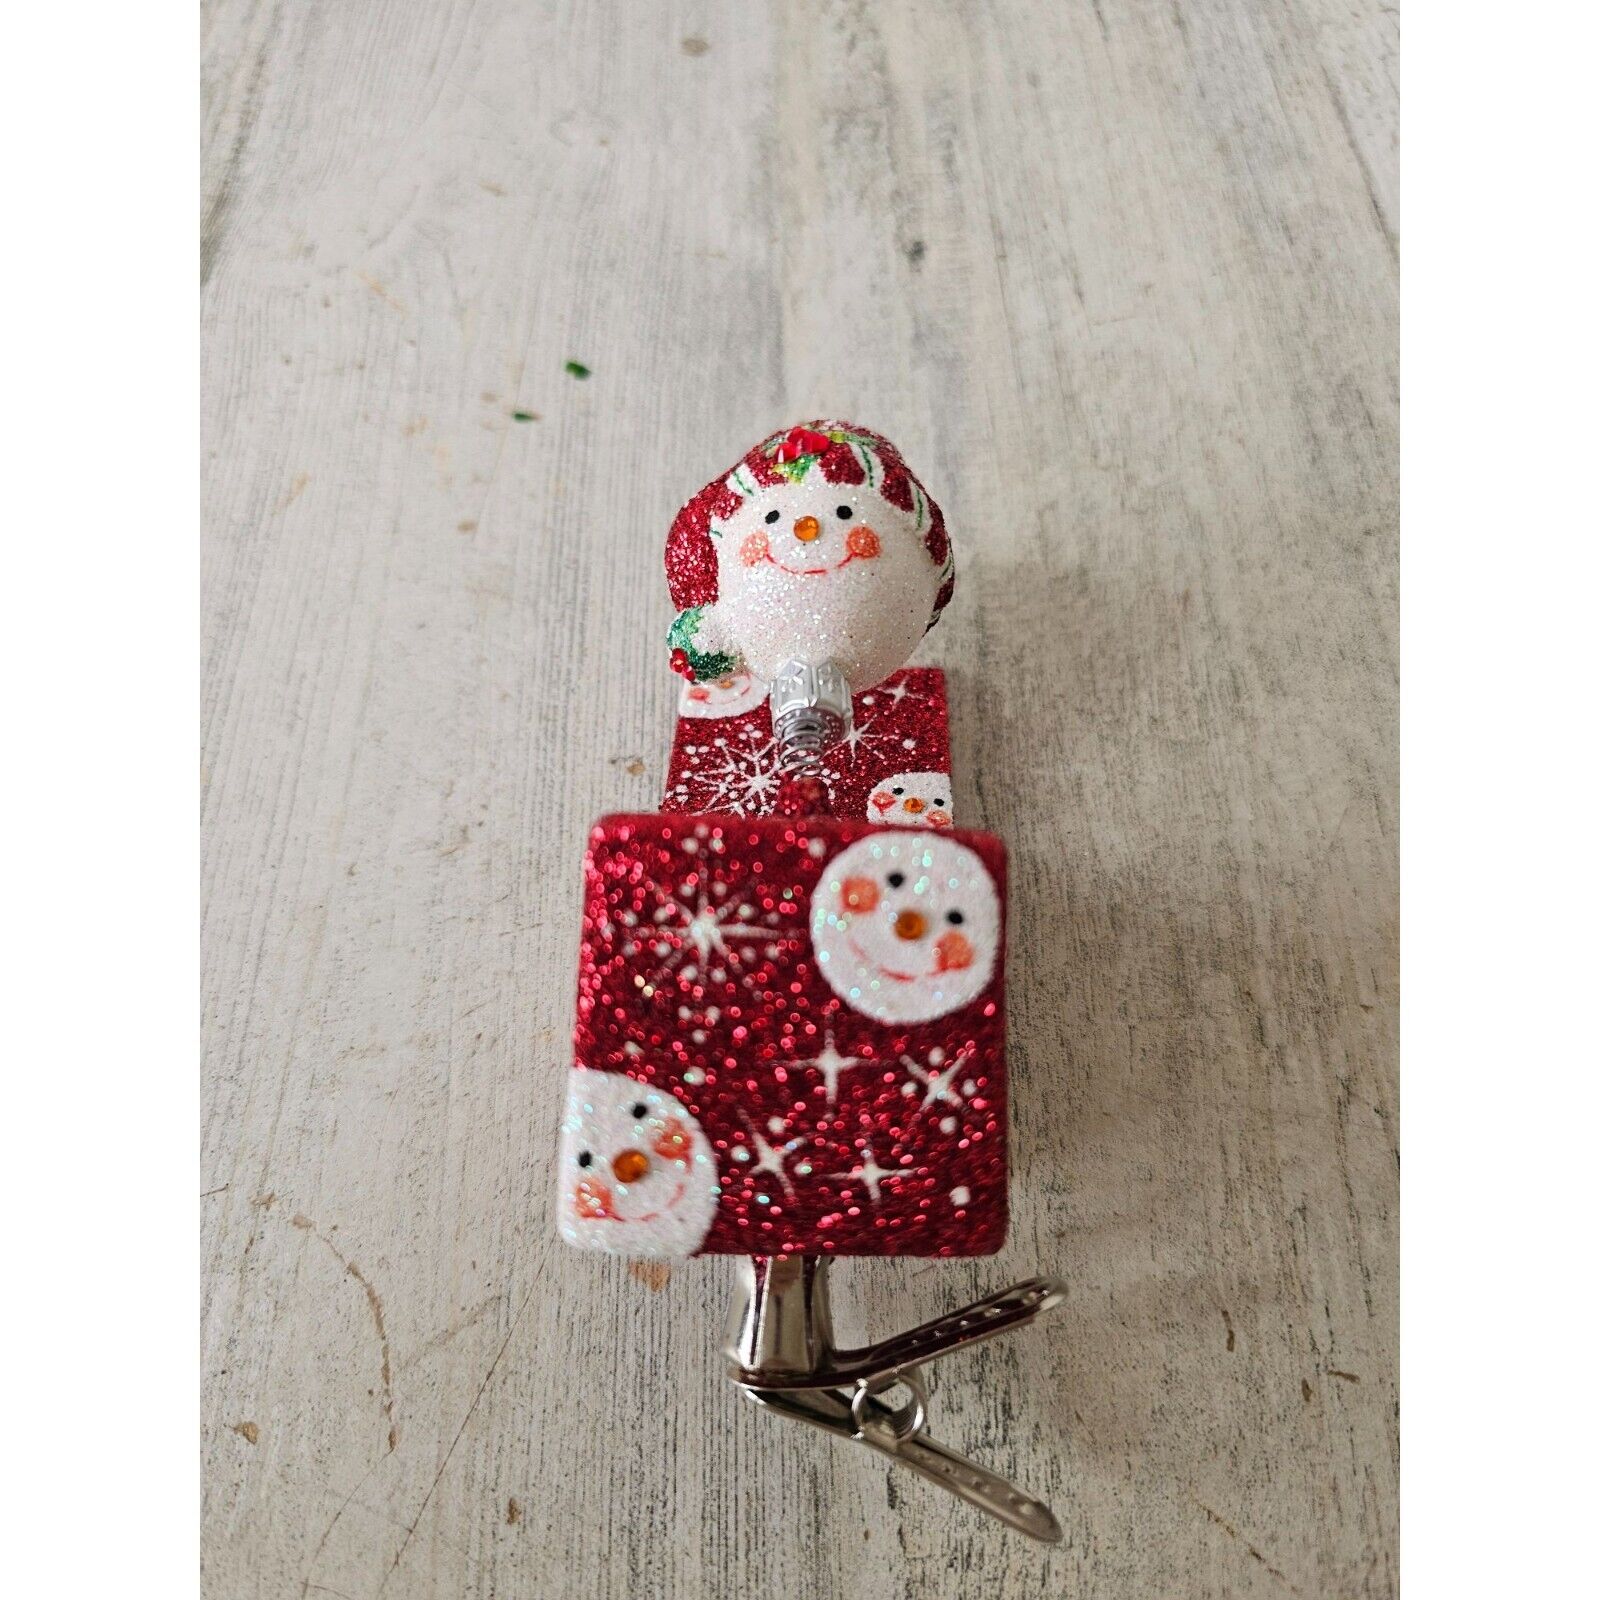 Patricia Breen jolly surprise snowman Jack in the box clip ornament vintage glit